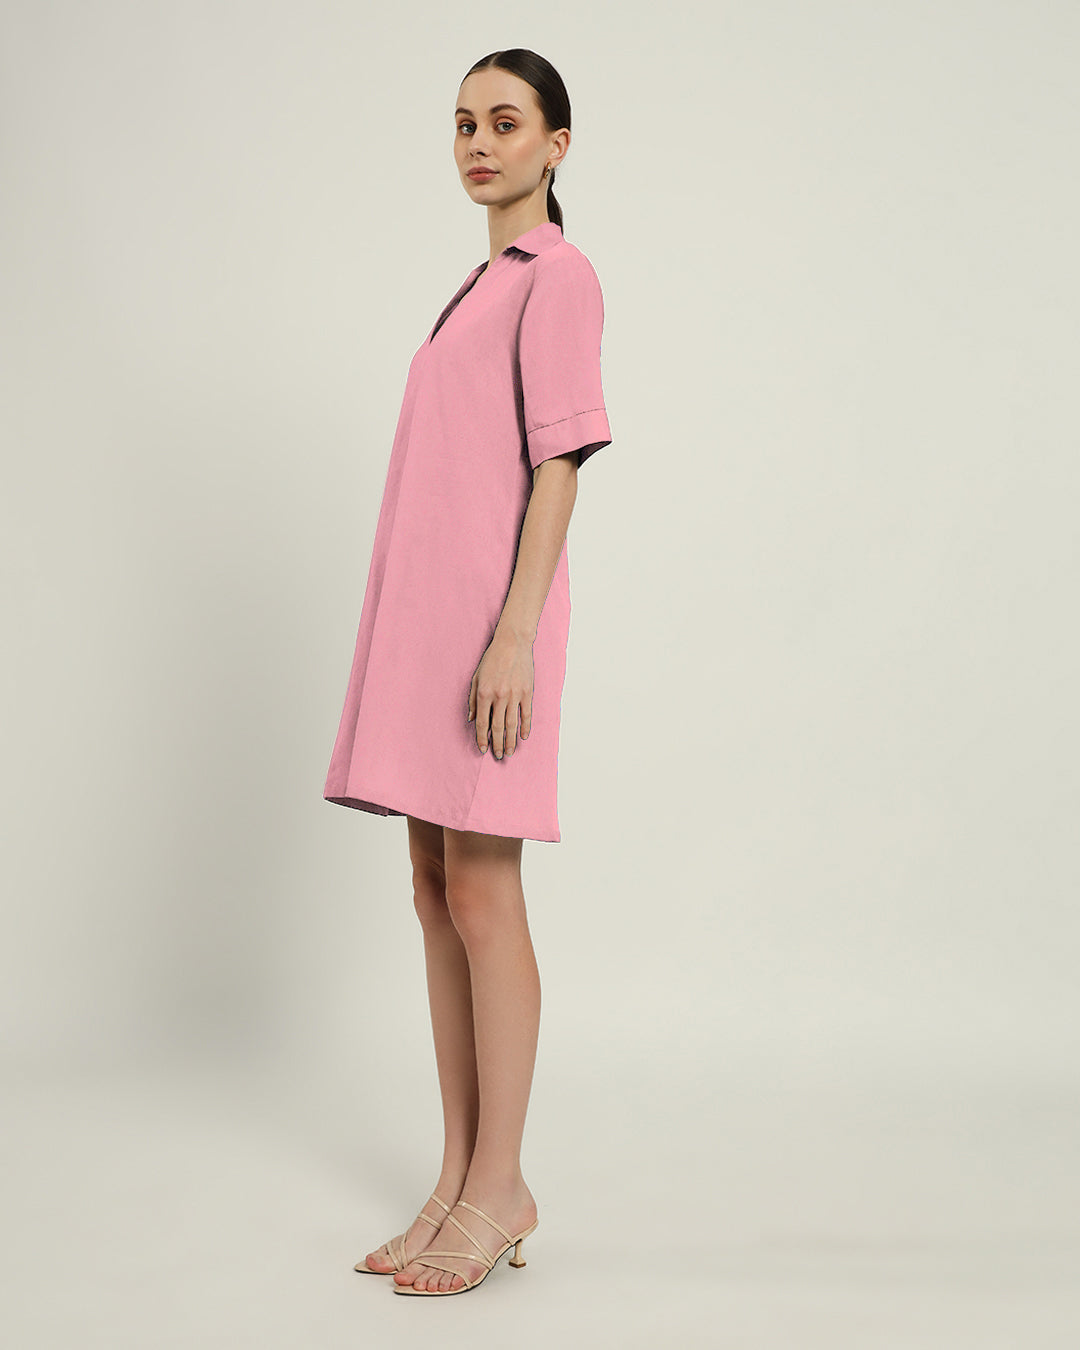 The Ermont Fondant Pink Cotton Dress